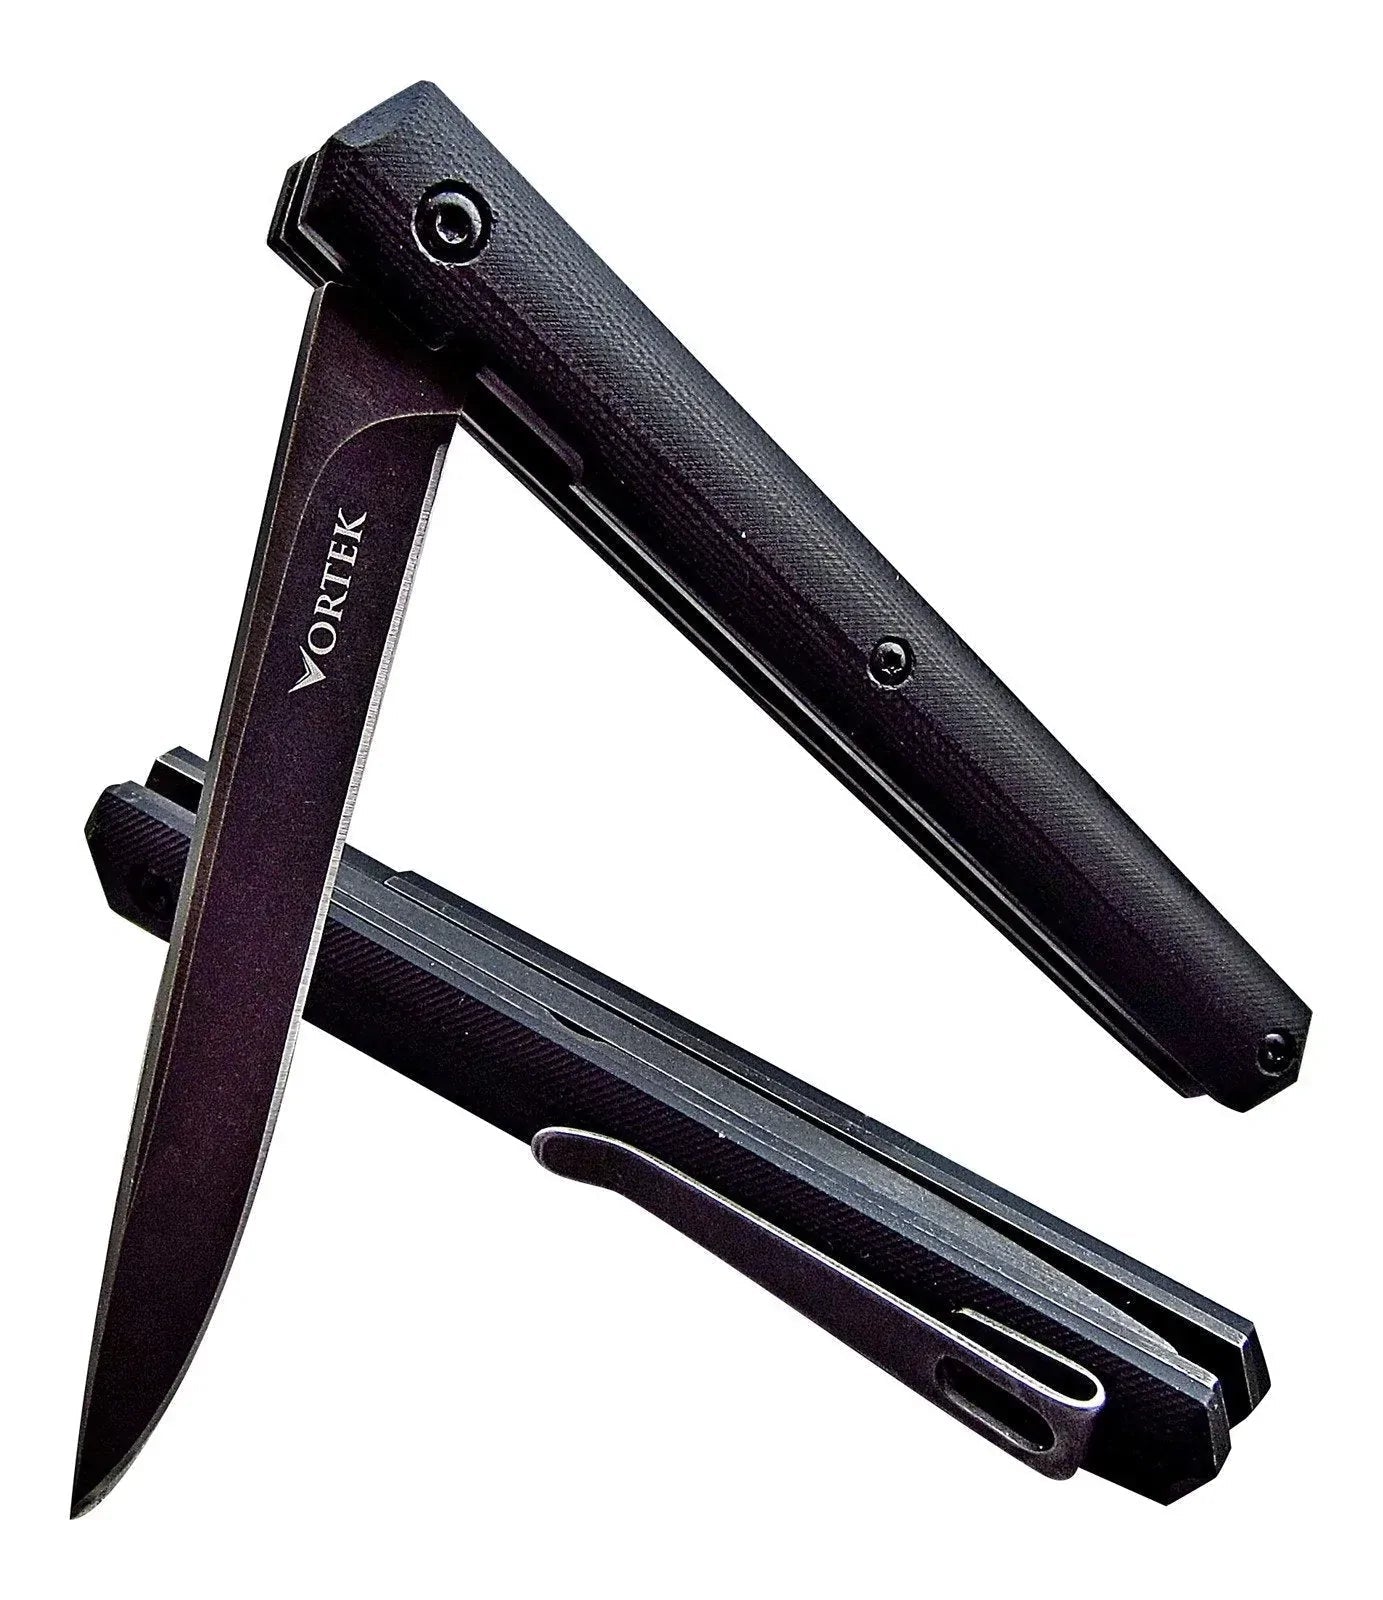 CALHOUN: Slim Low Profile Design, Black G10 Handles, 8Cr13MoV Blade